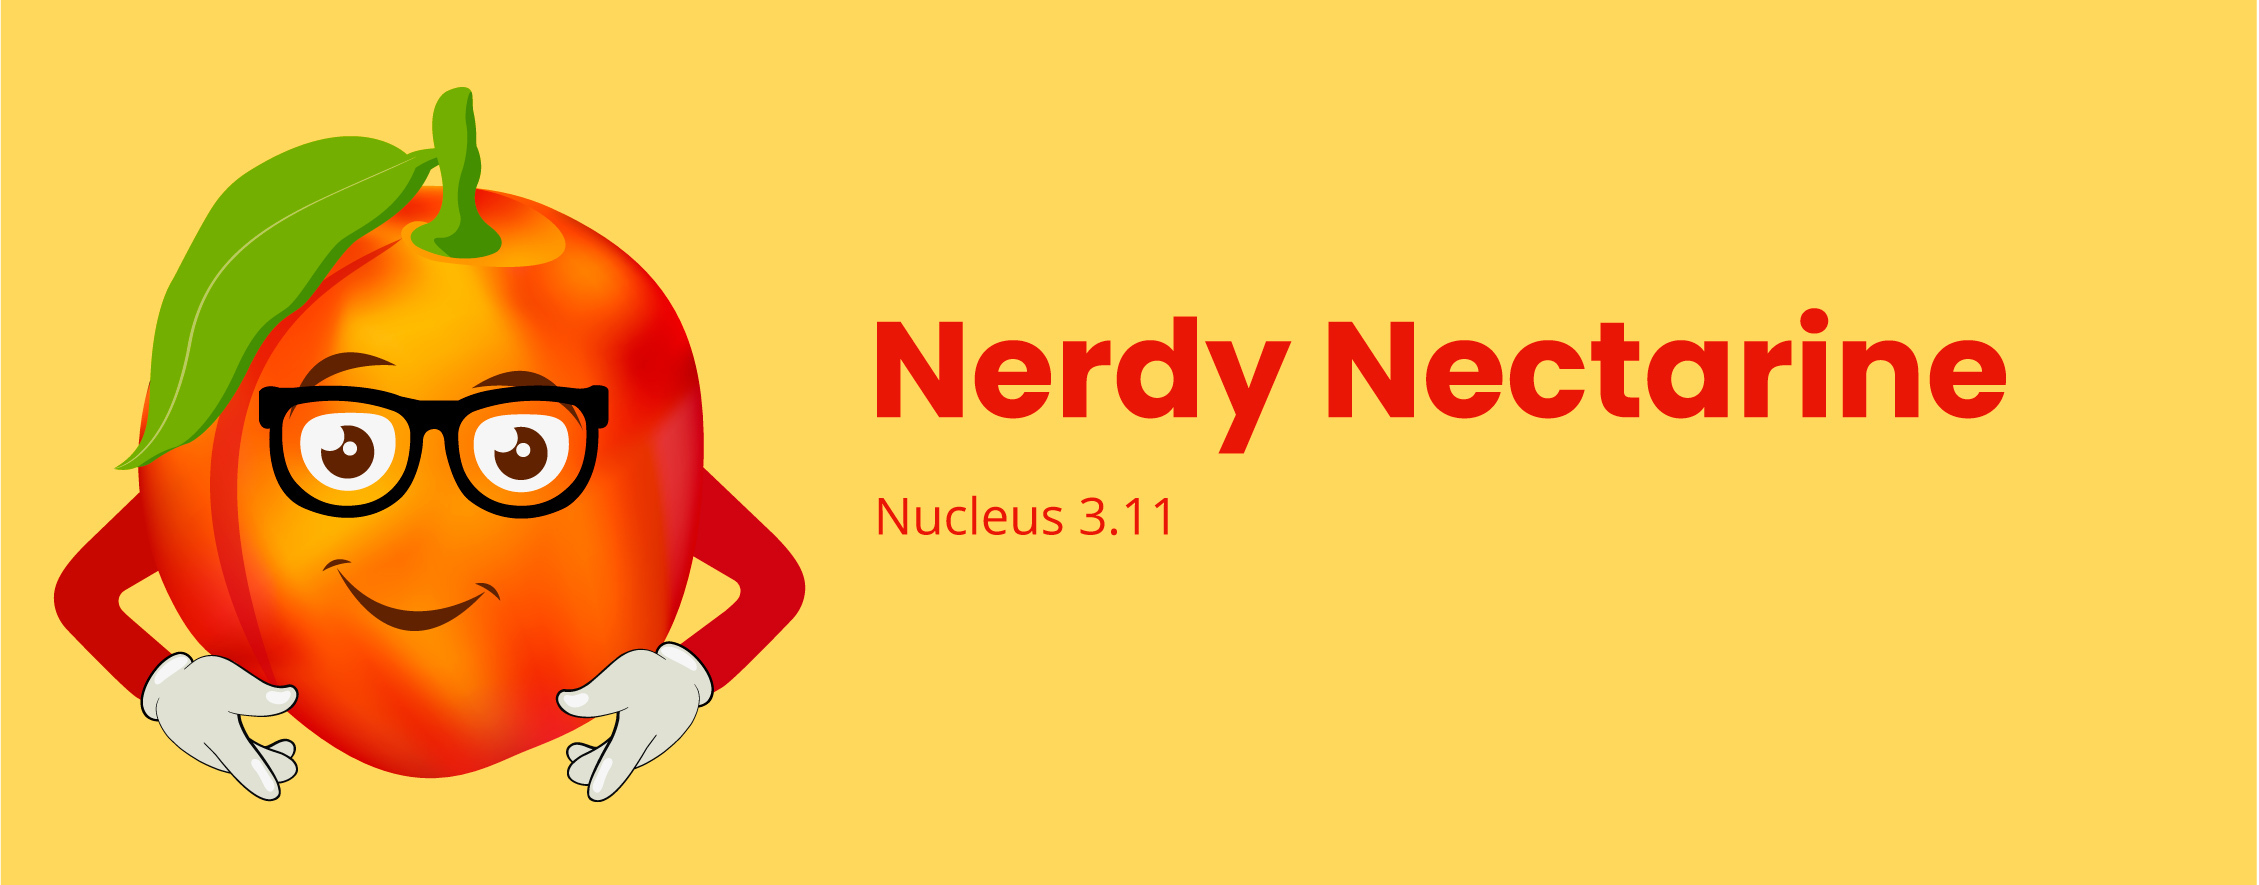 NERDY-NECTURINE-NUCLEASE-RELEASE.jpg